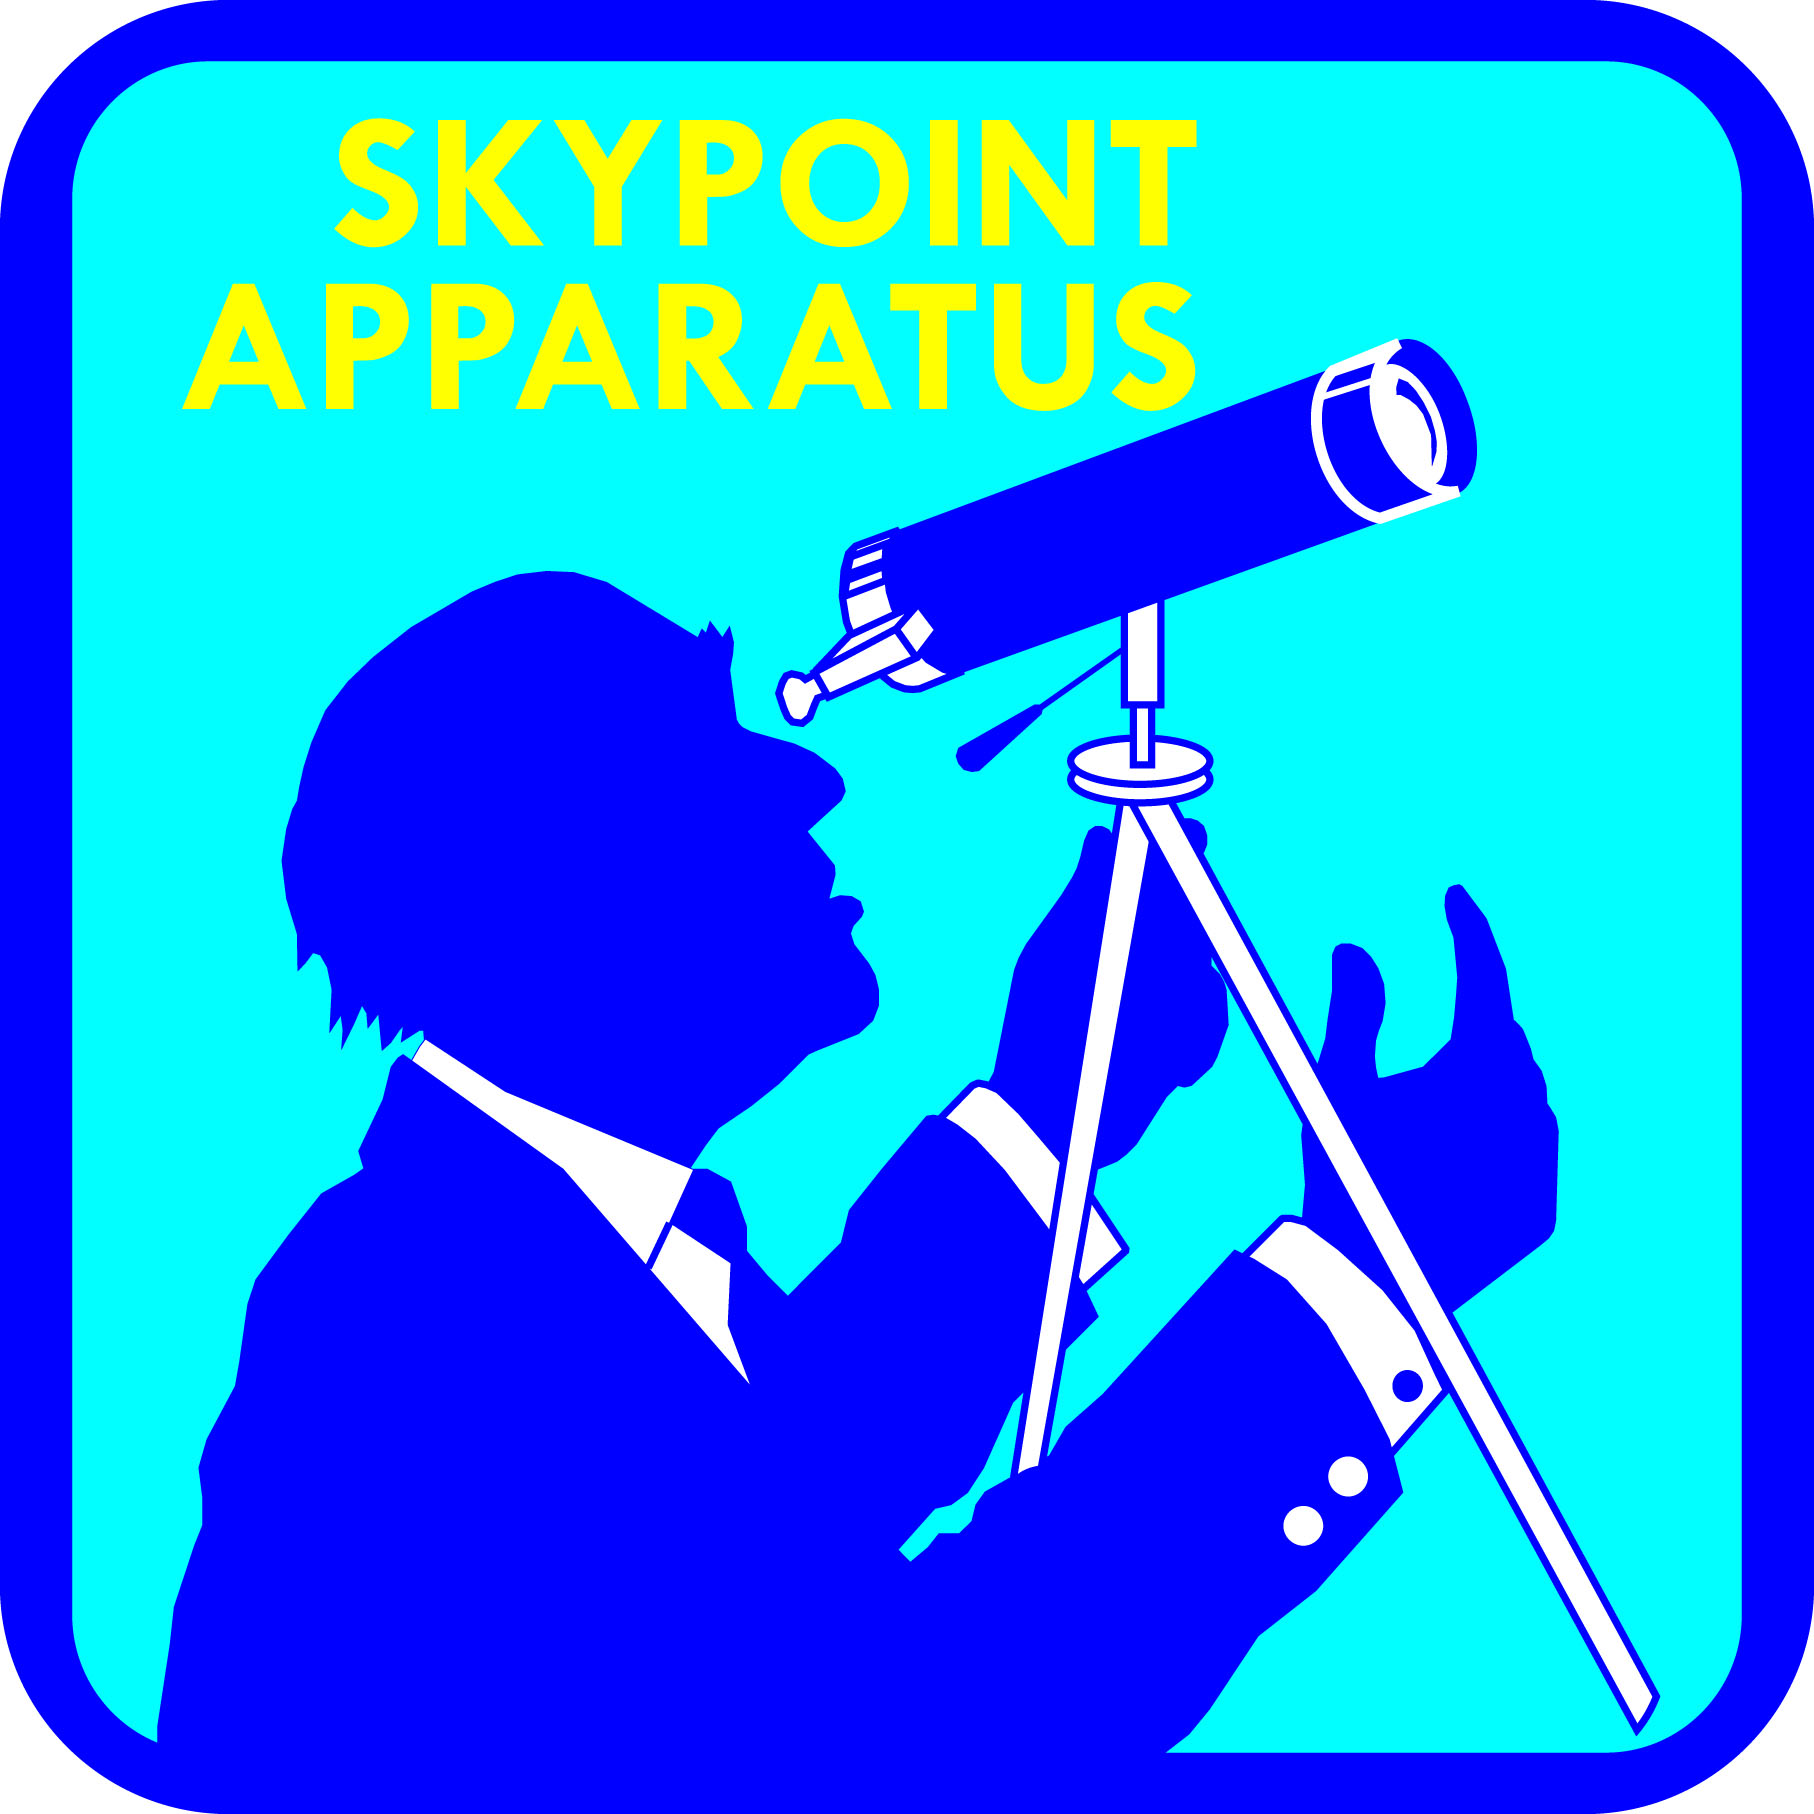 Skypoint Apparatus Telescopes, Binoculars, Spotting Scopes, Night Vision Binoculars